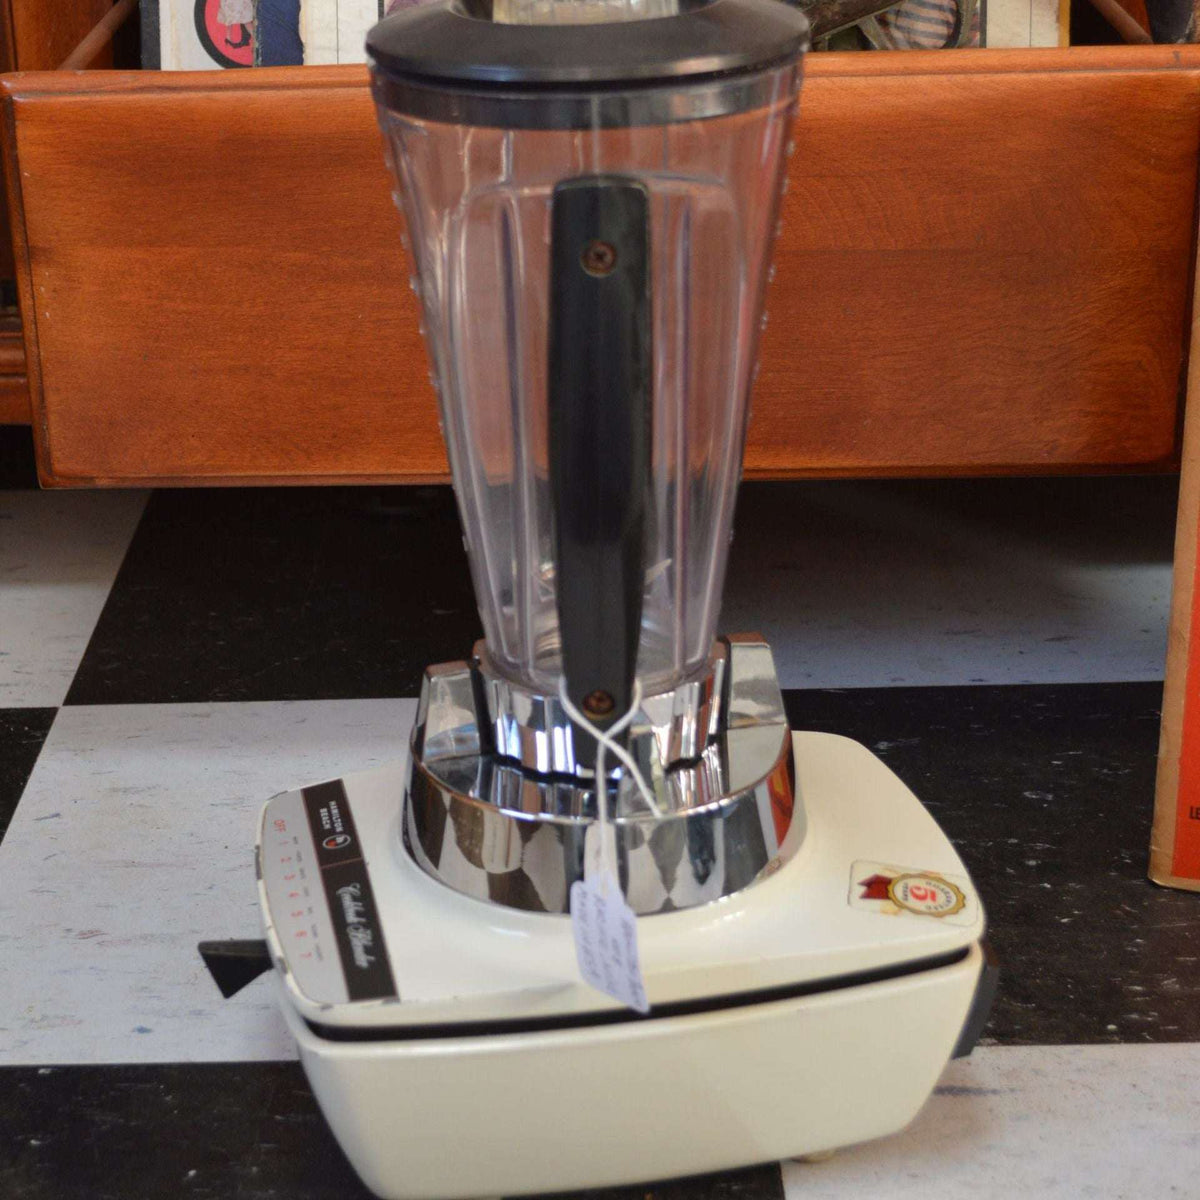 My first vintage kitchen gadget; a Hamilton beach blender, model